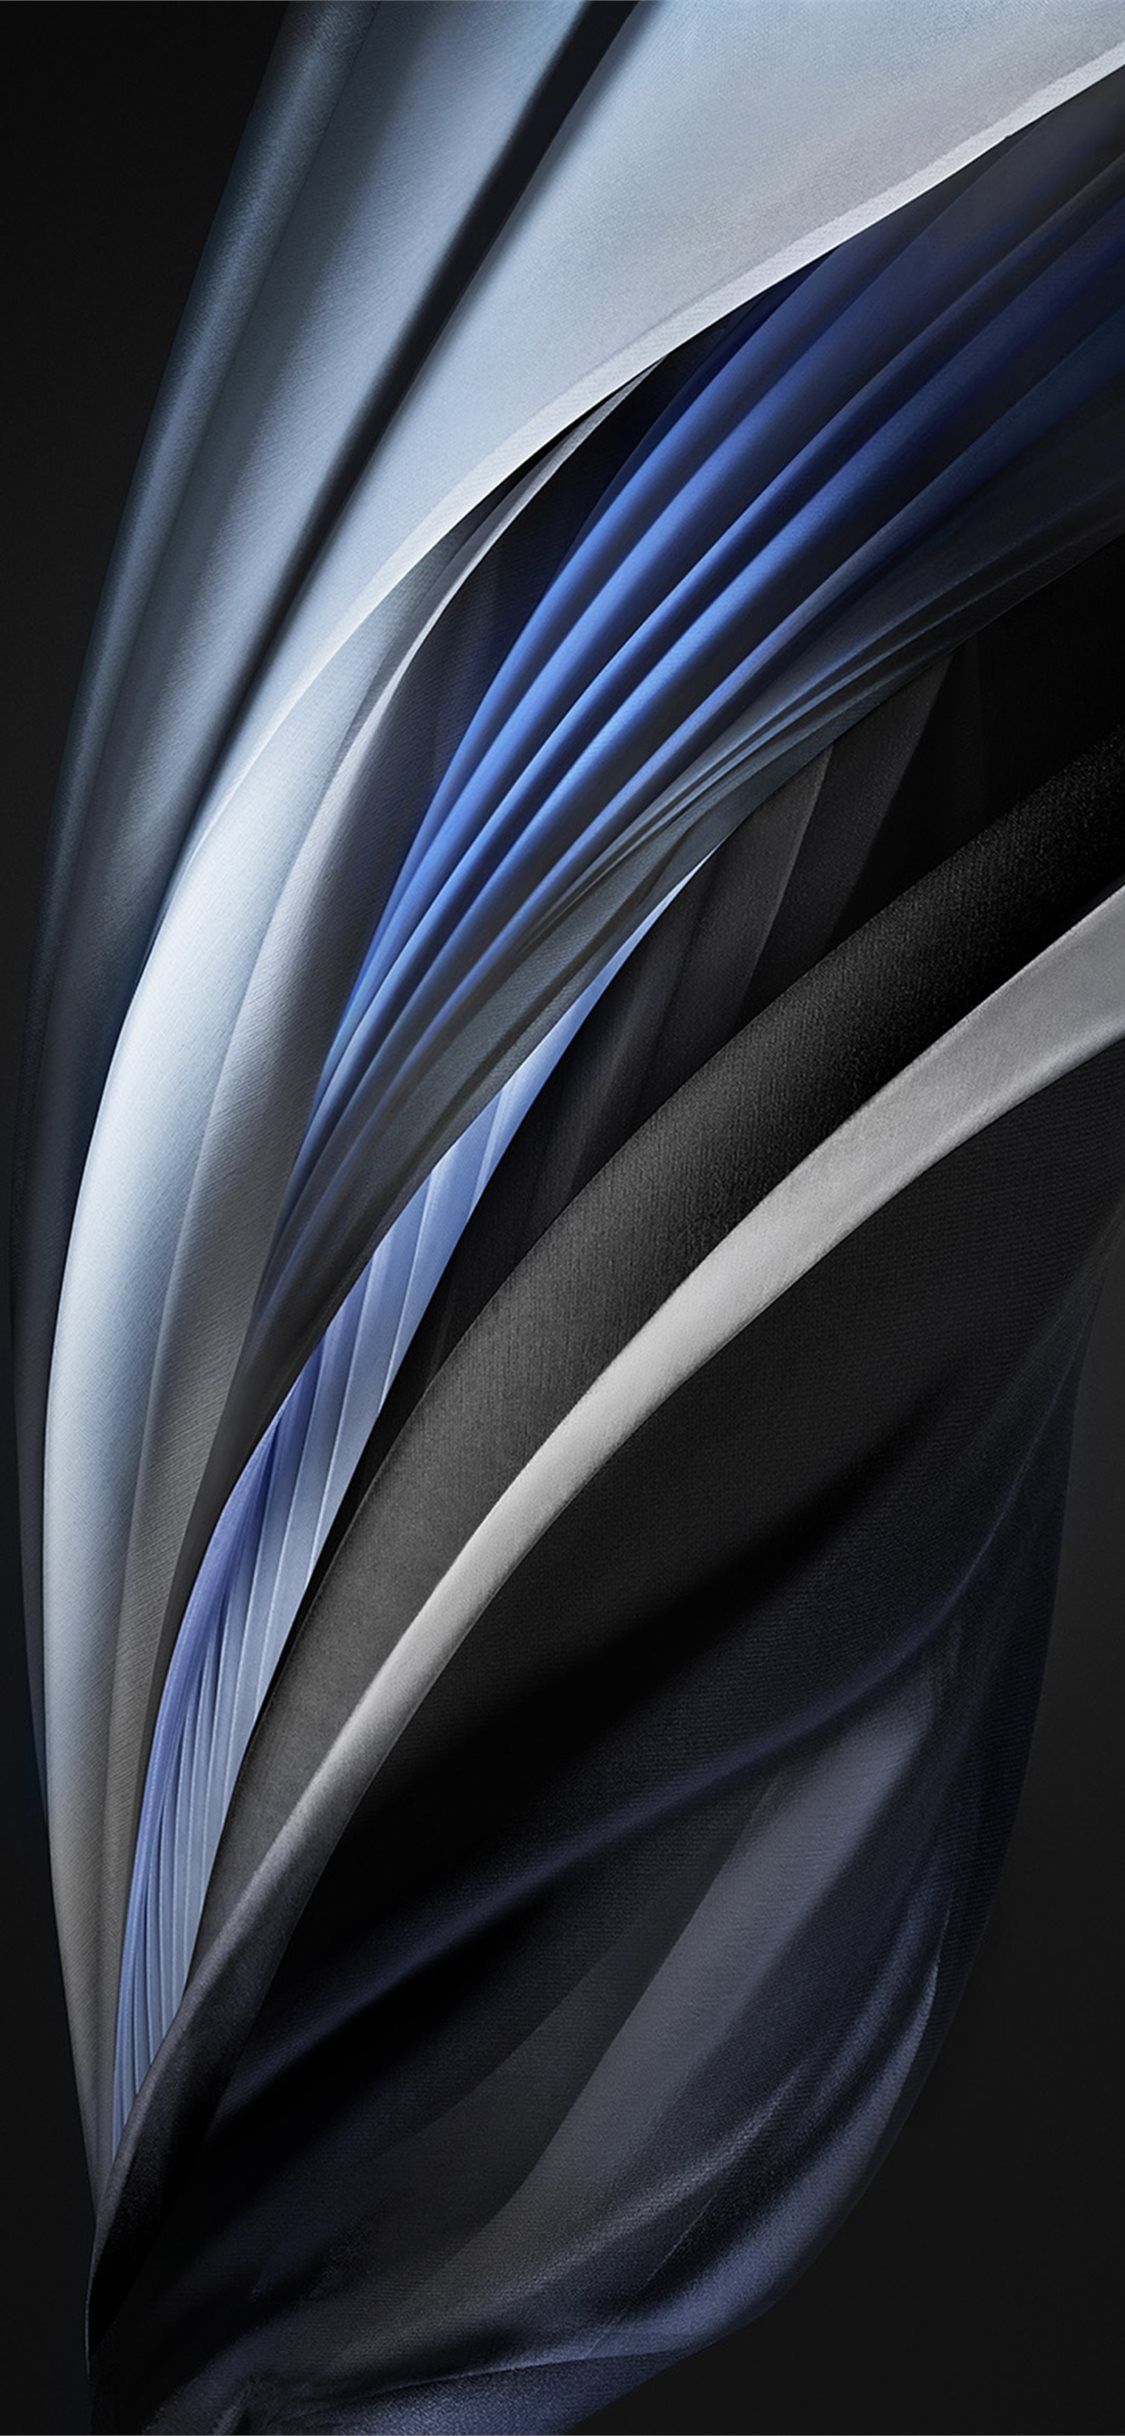 Aesthetic iPhone X HD Wallpaper